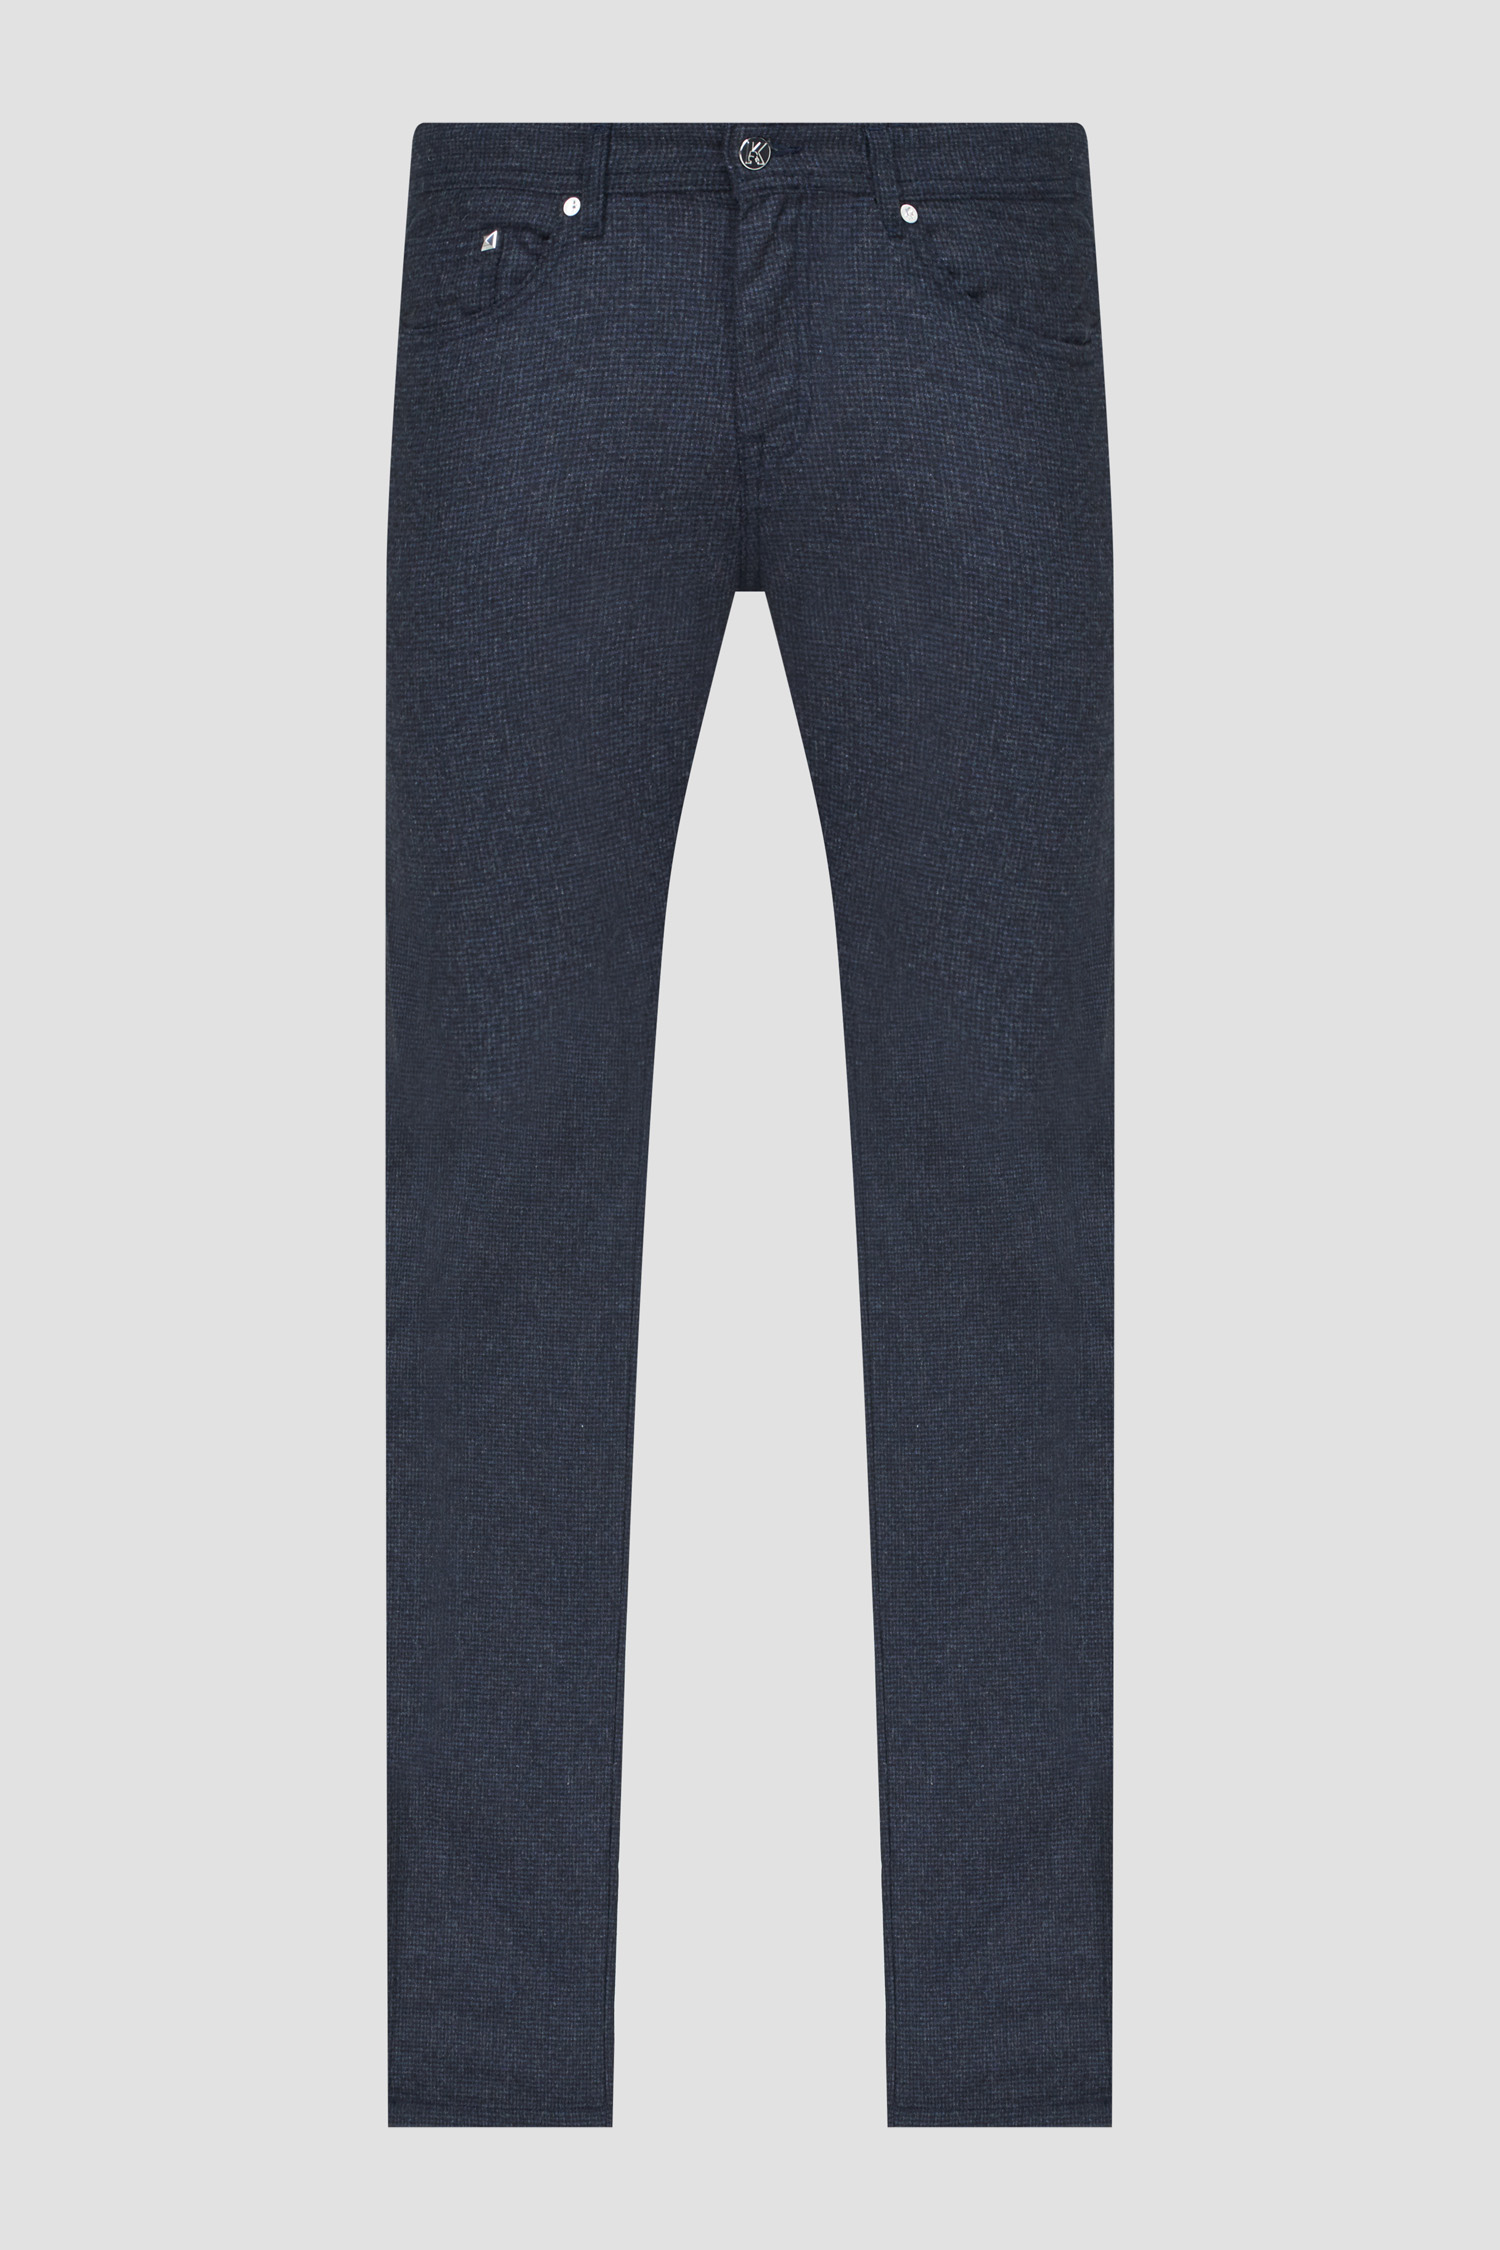 Мужские темно-синие шерстяные брюки Karl Lagerfeld 534805.265840;690